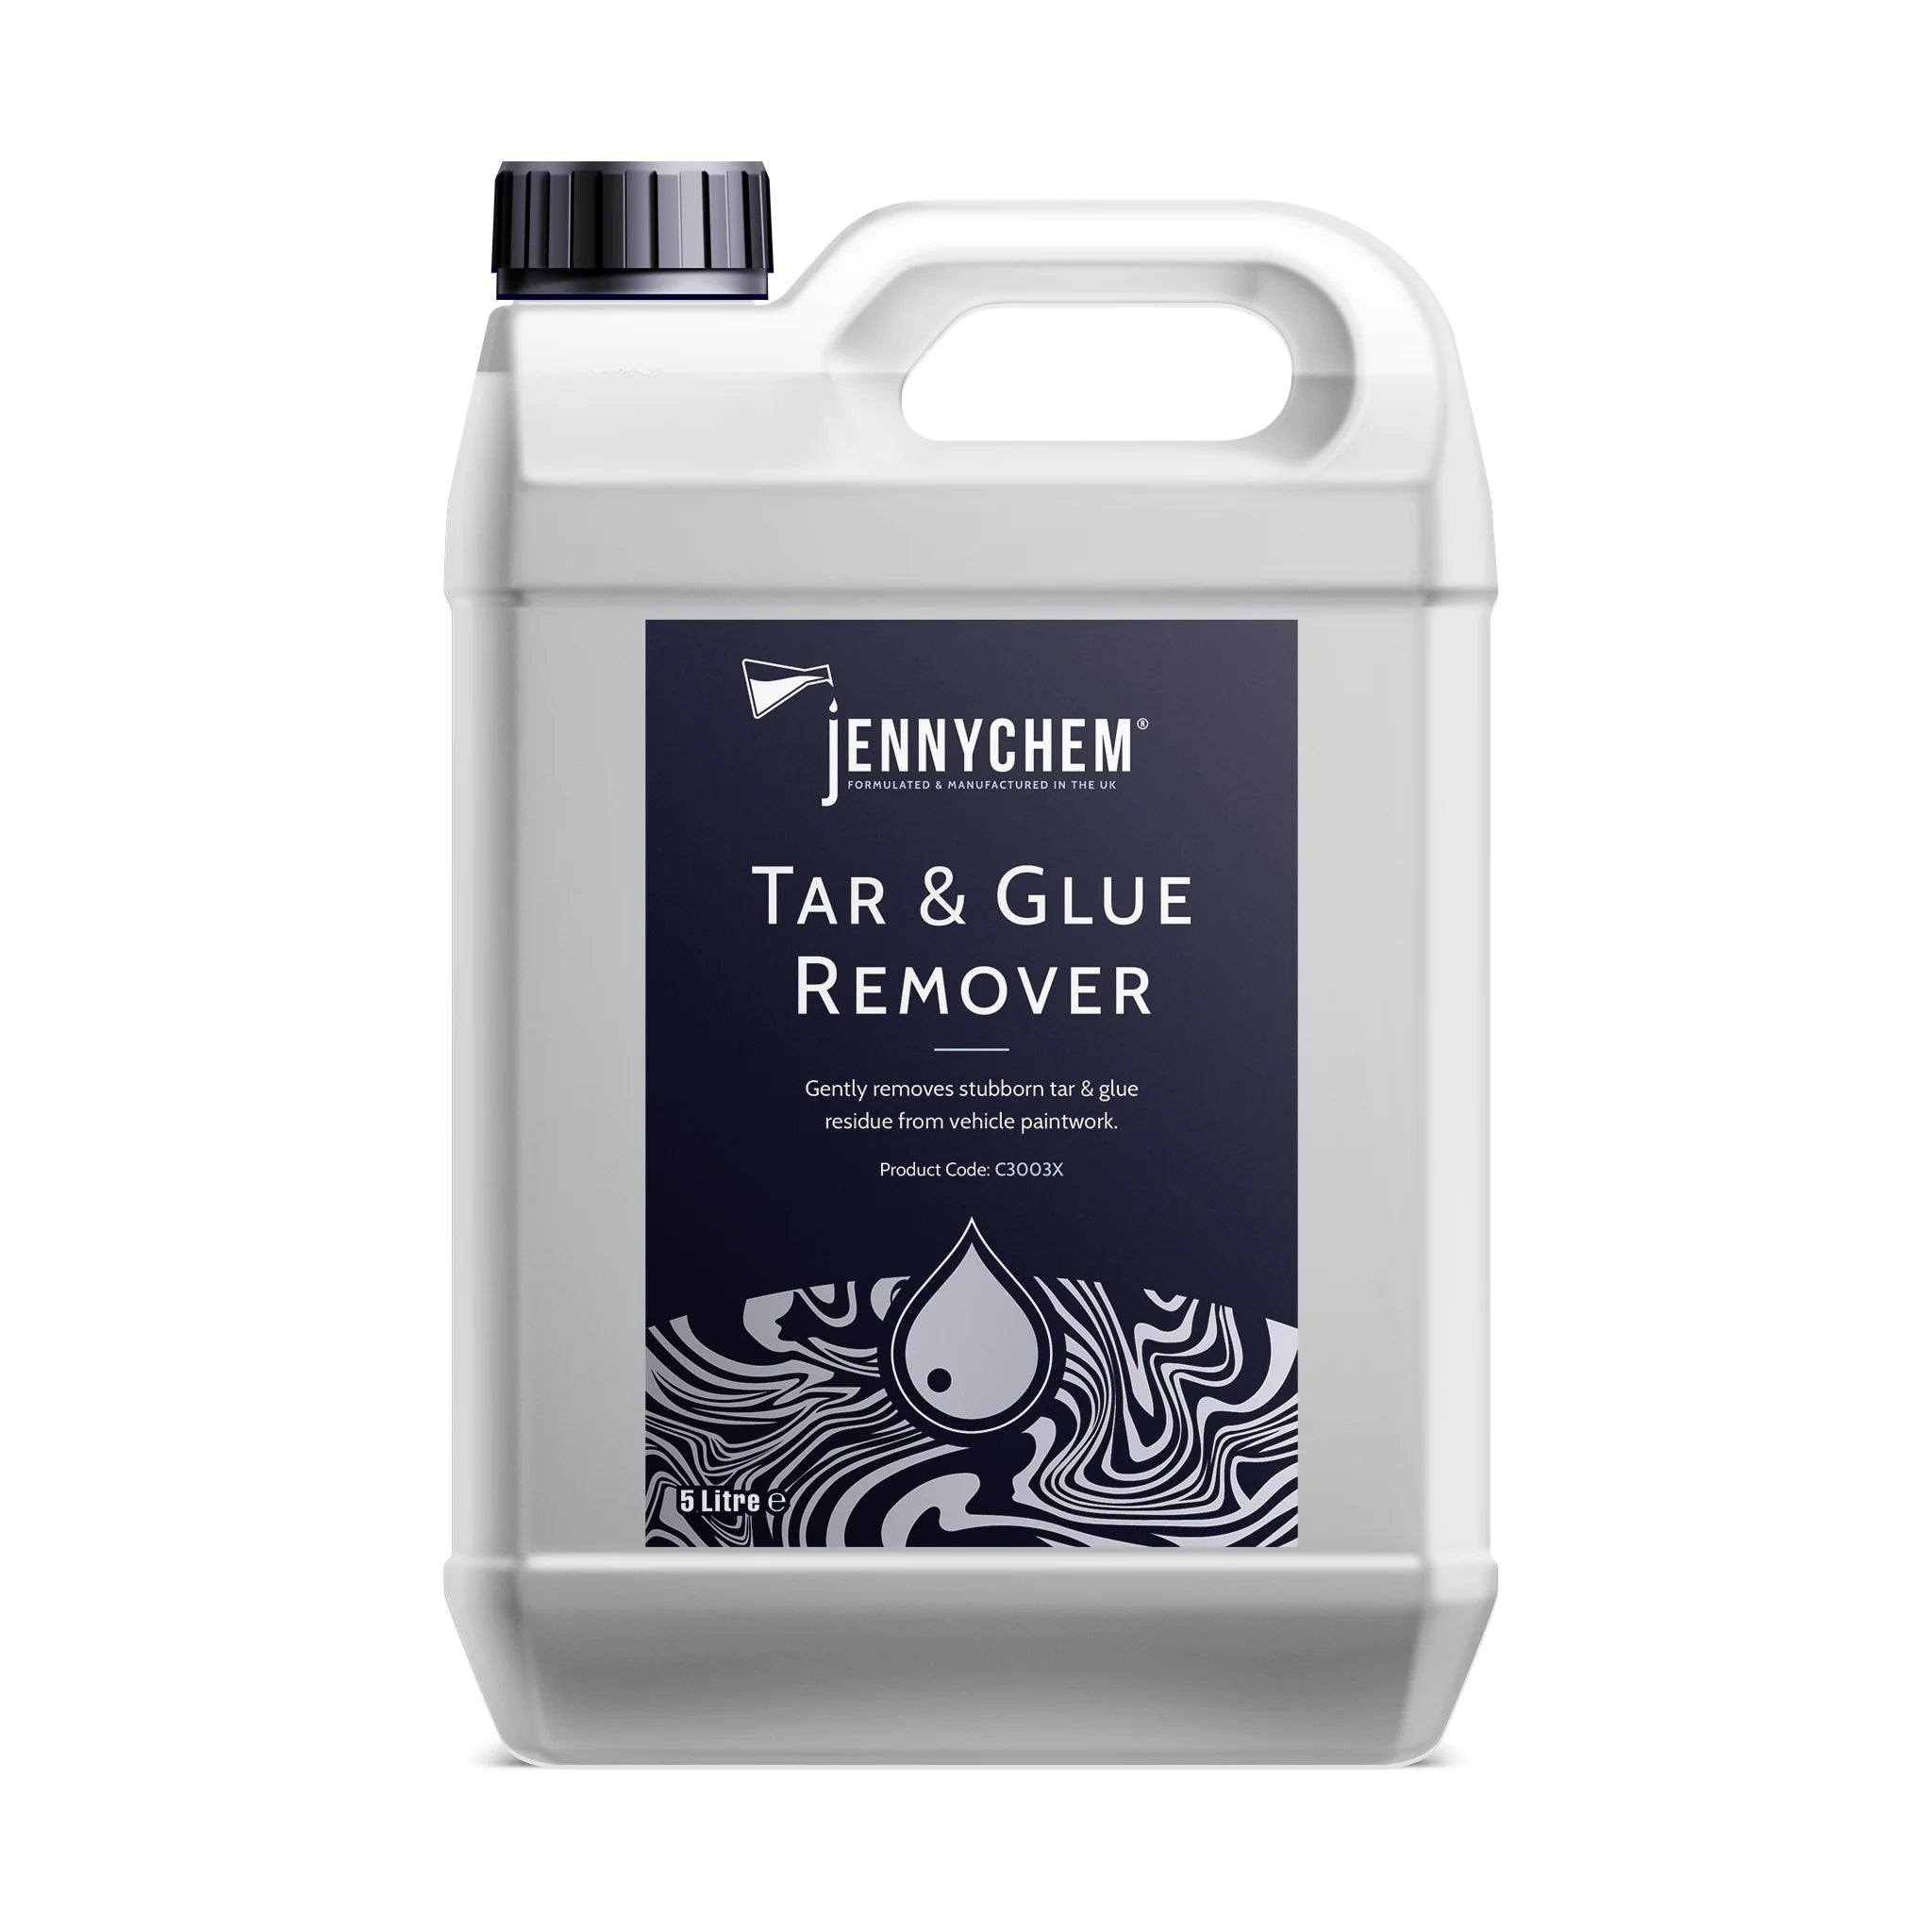 Jennychem Tar & Glue Remover 5L